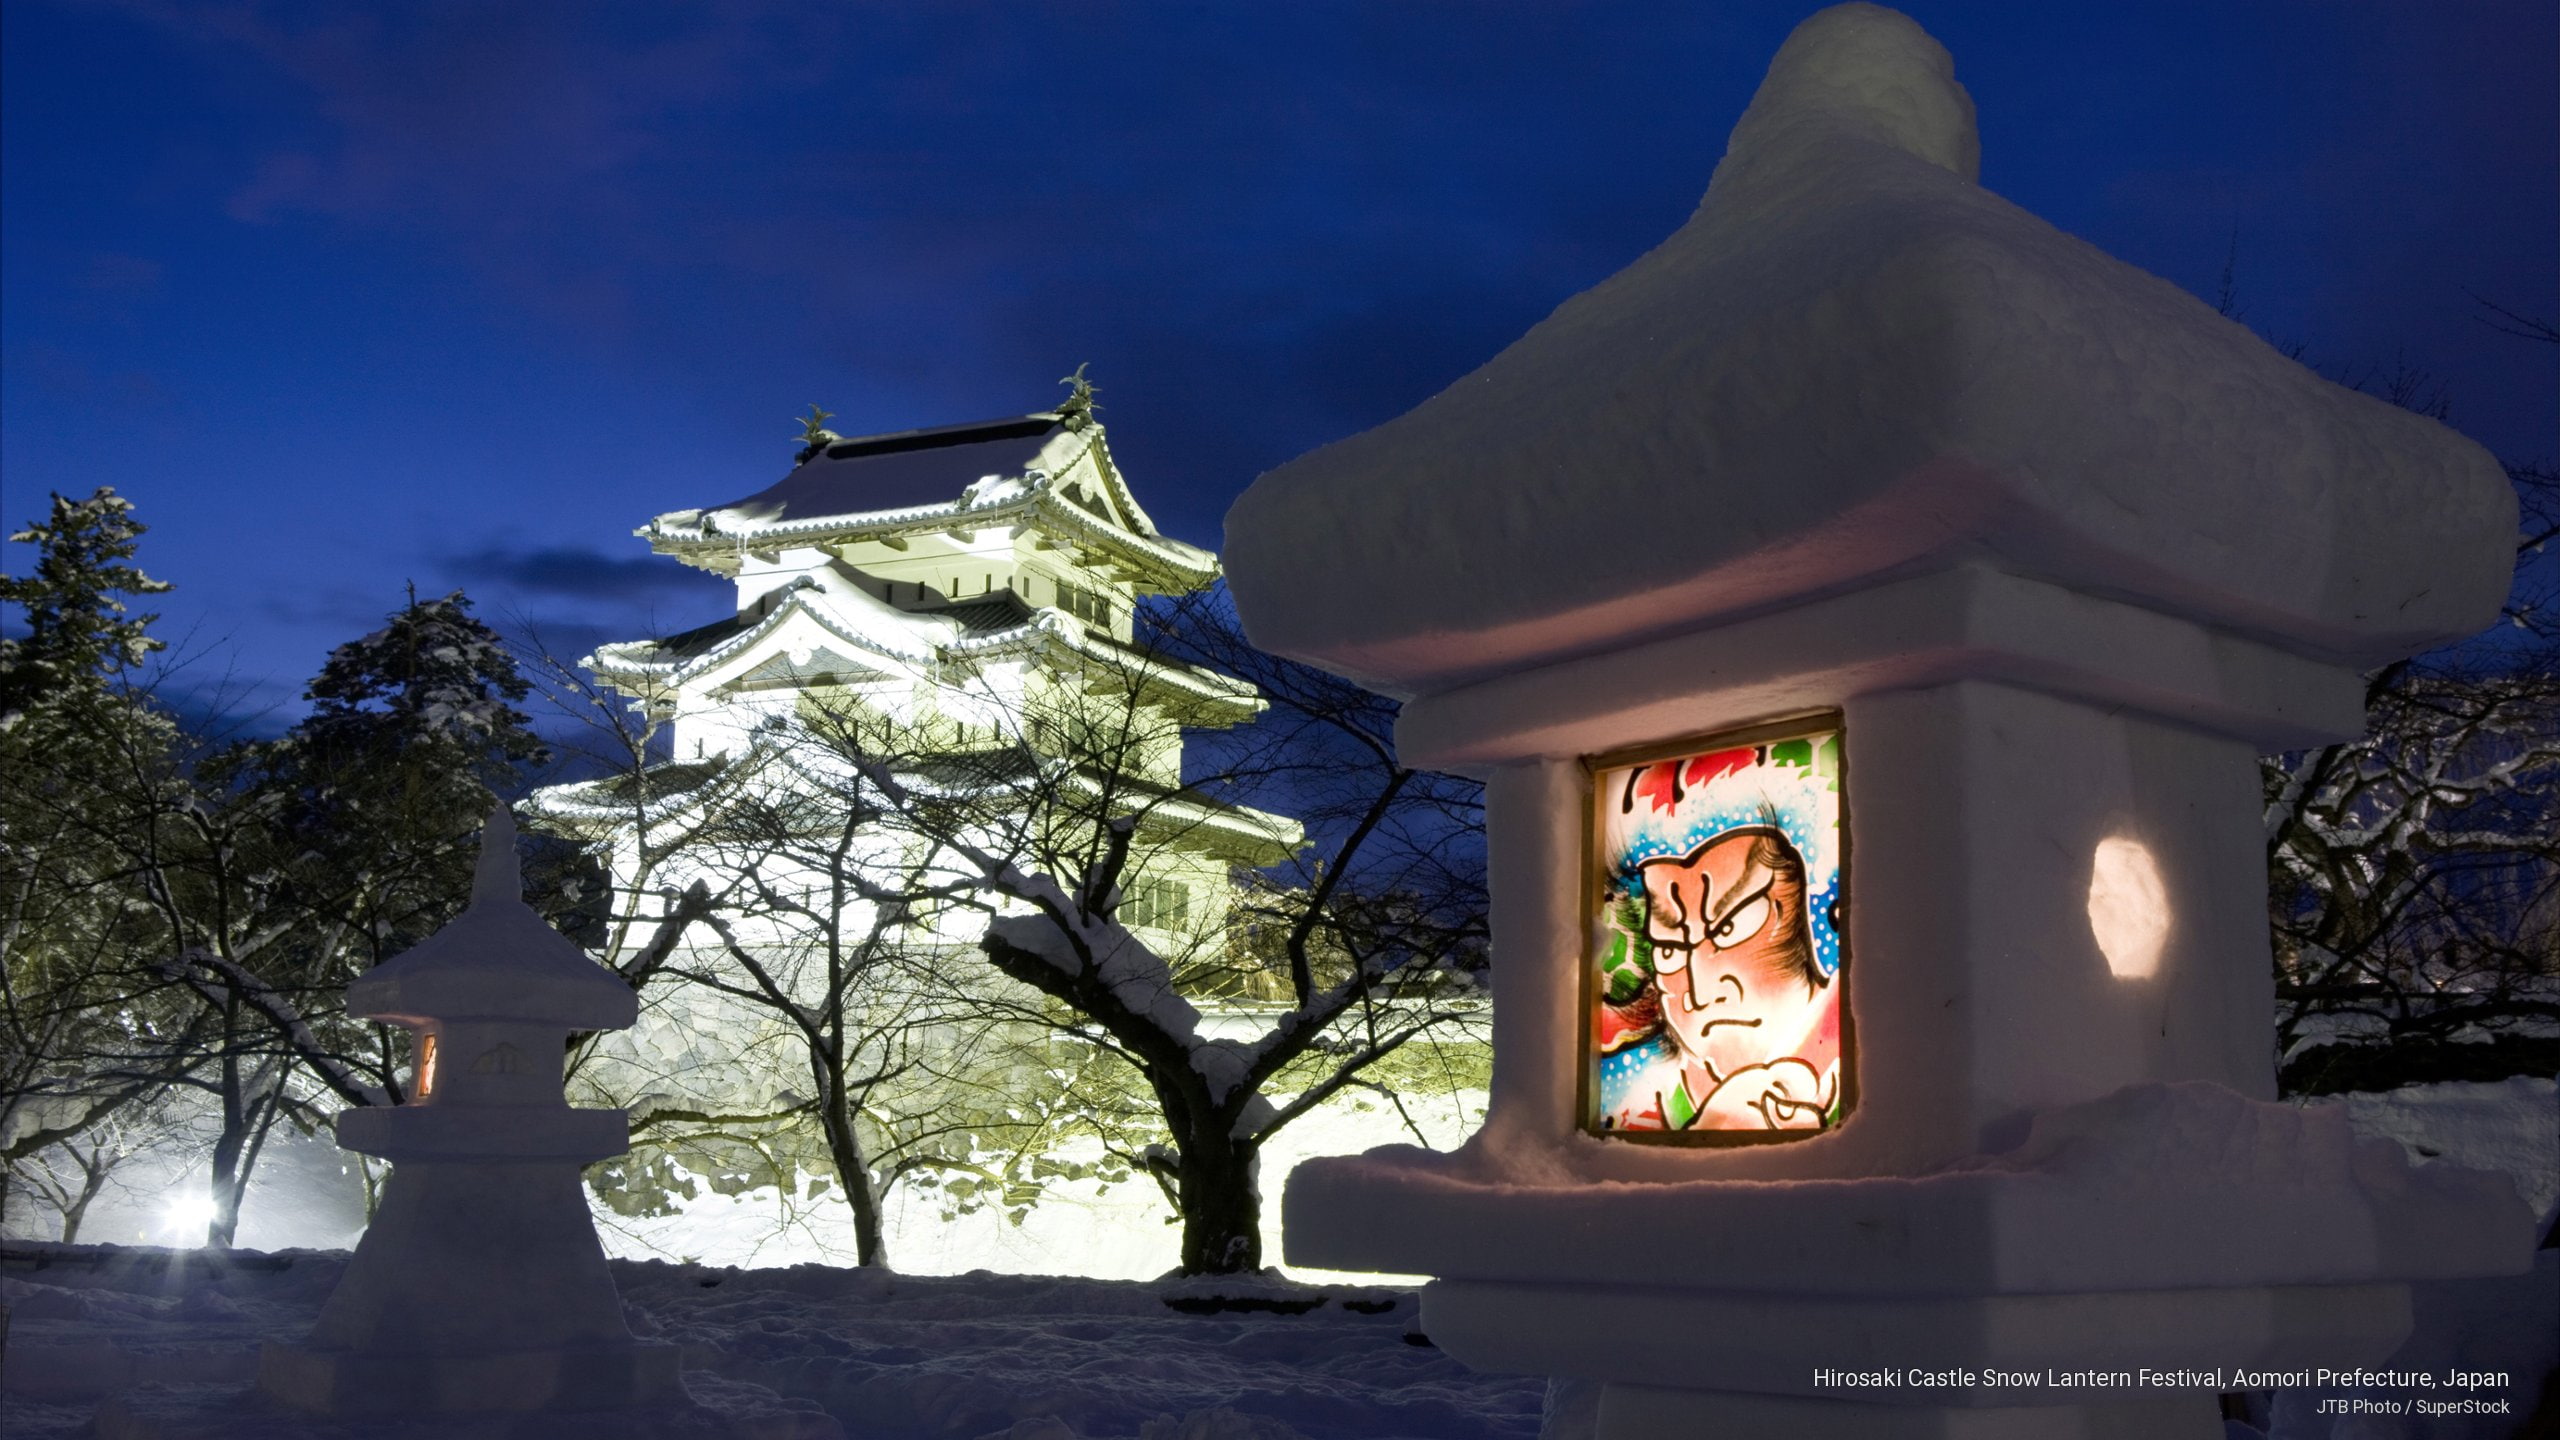 Hirosaki Castle Snow Lantern Festival, Aomori Prefecture, Japan